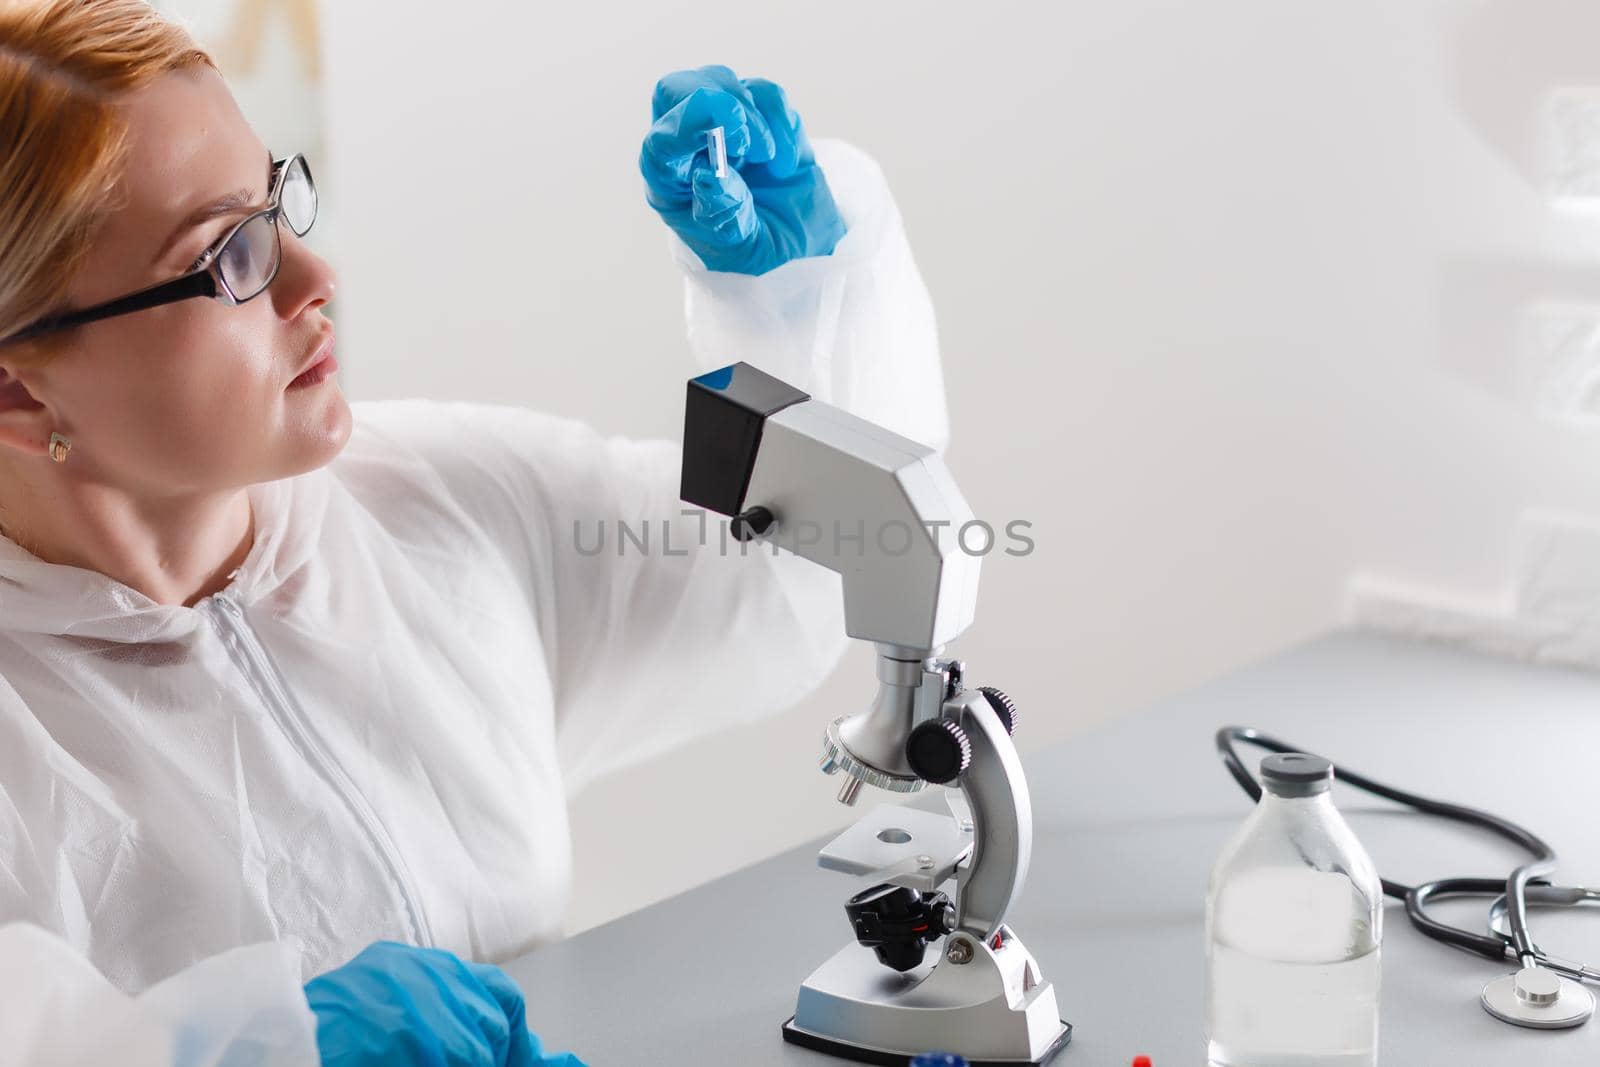 A beautiful female medical or scientific researcher using her microscope in a laboratory.